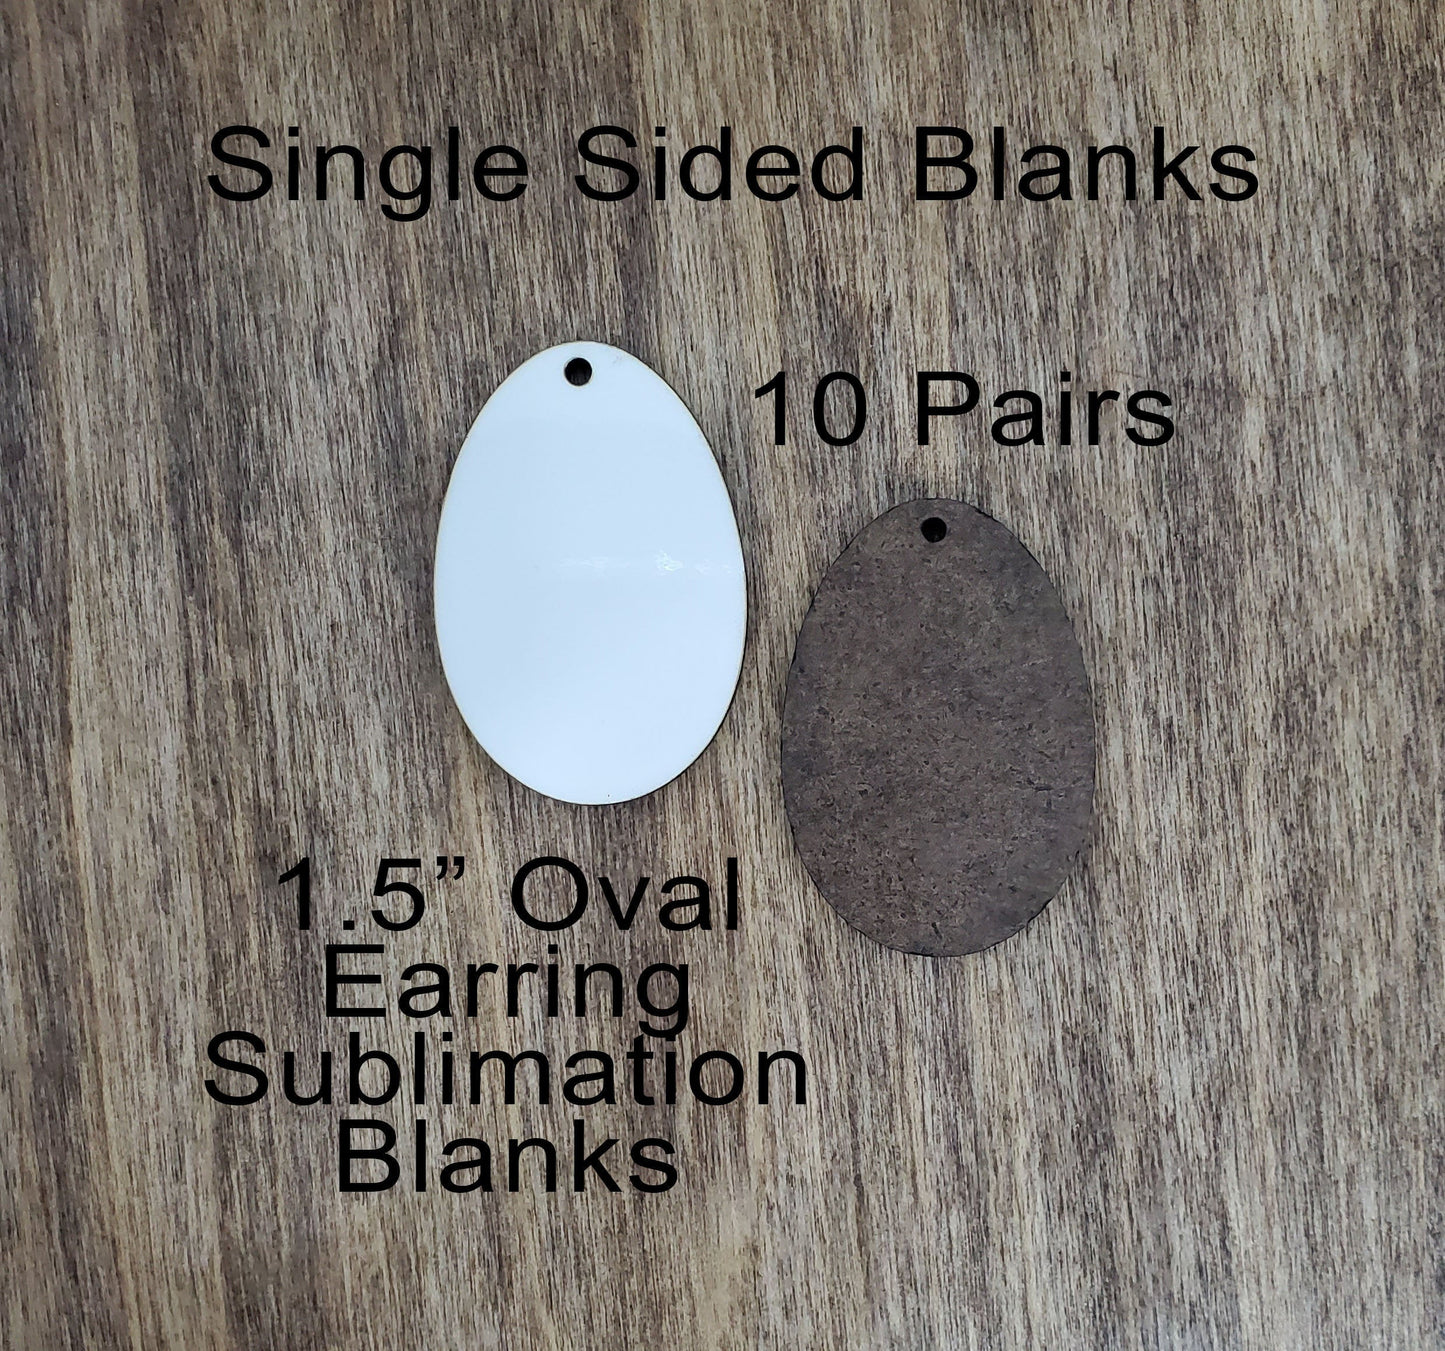 Sublimation hardboard blanks, oval earring sublimation blanks, SINGLE-sided oval earring shape blanks for sublimation